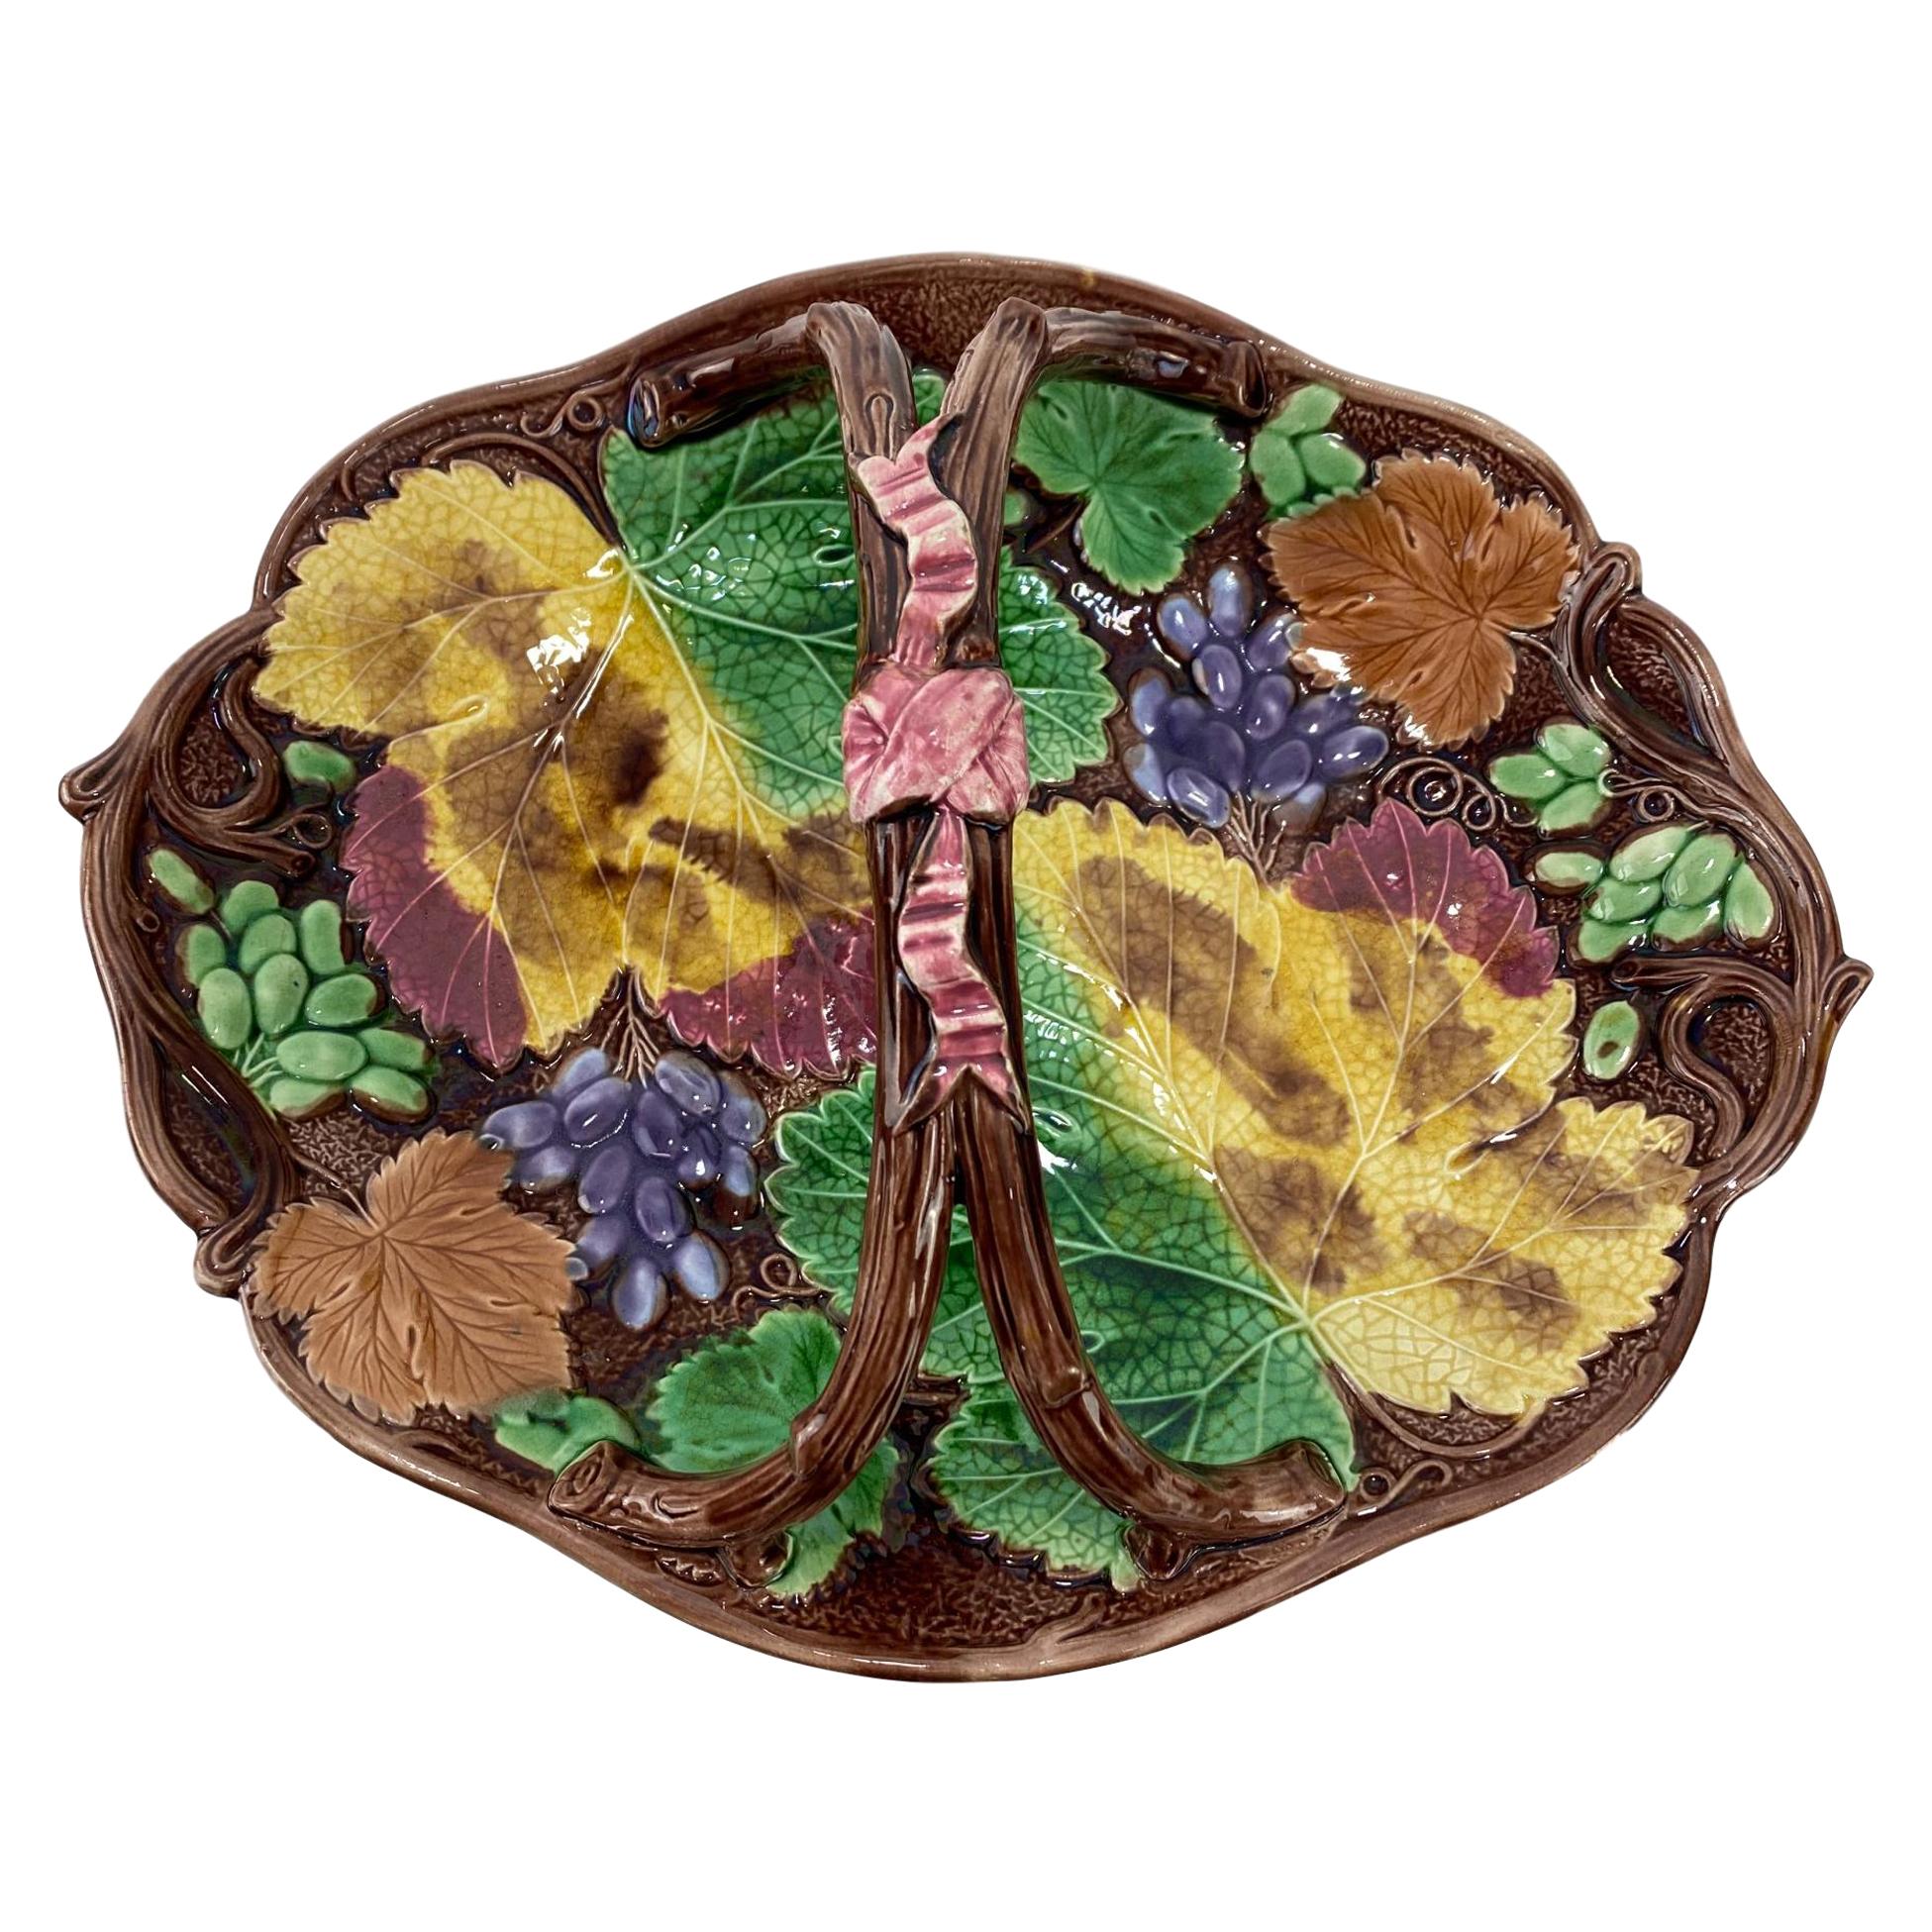 Wedgwood Majolica Leaf and Vine Bread Basket, English, Dated 1874